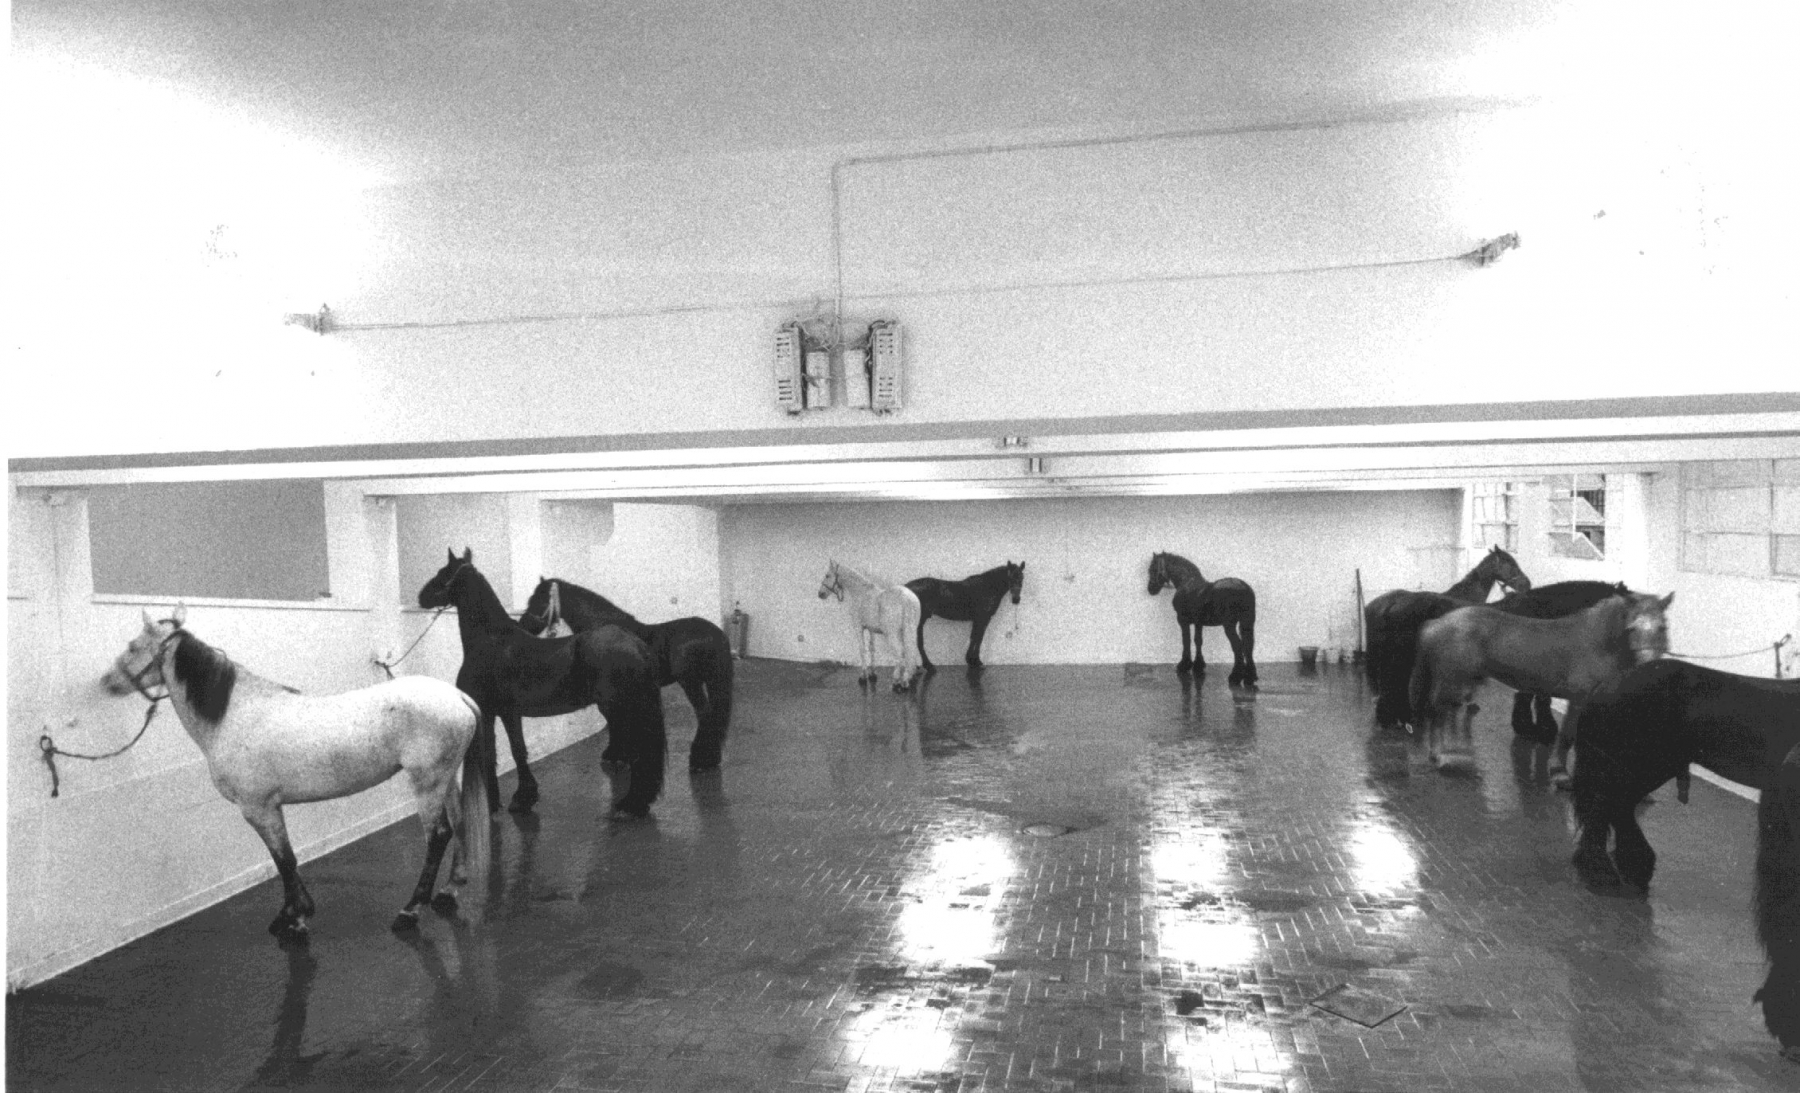 Jannis Kounellis, Untitled (12 Horses) (1969)
&amp;copy; Jannis Kounellis Estate
Courtesy Jannis Kounellis Estate and Gavin Brown&amp;#39;s enterprise New York/Rome, photo by Claudio Abate

&amp;nbsp;